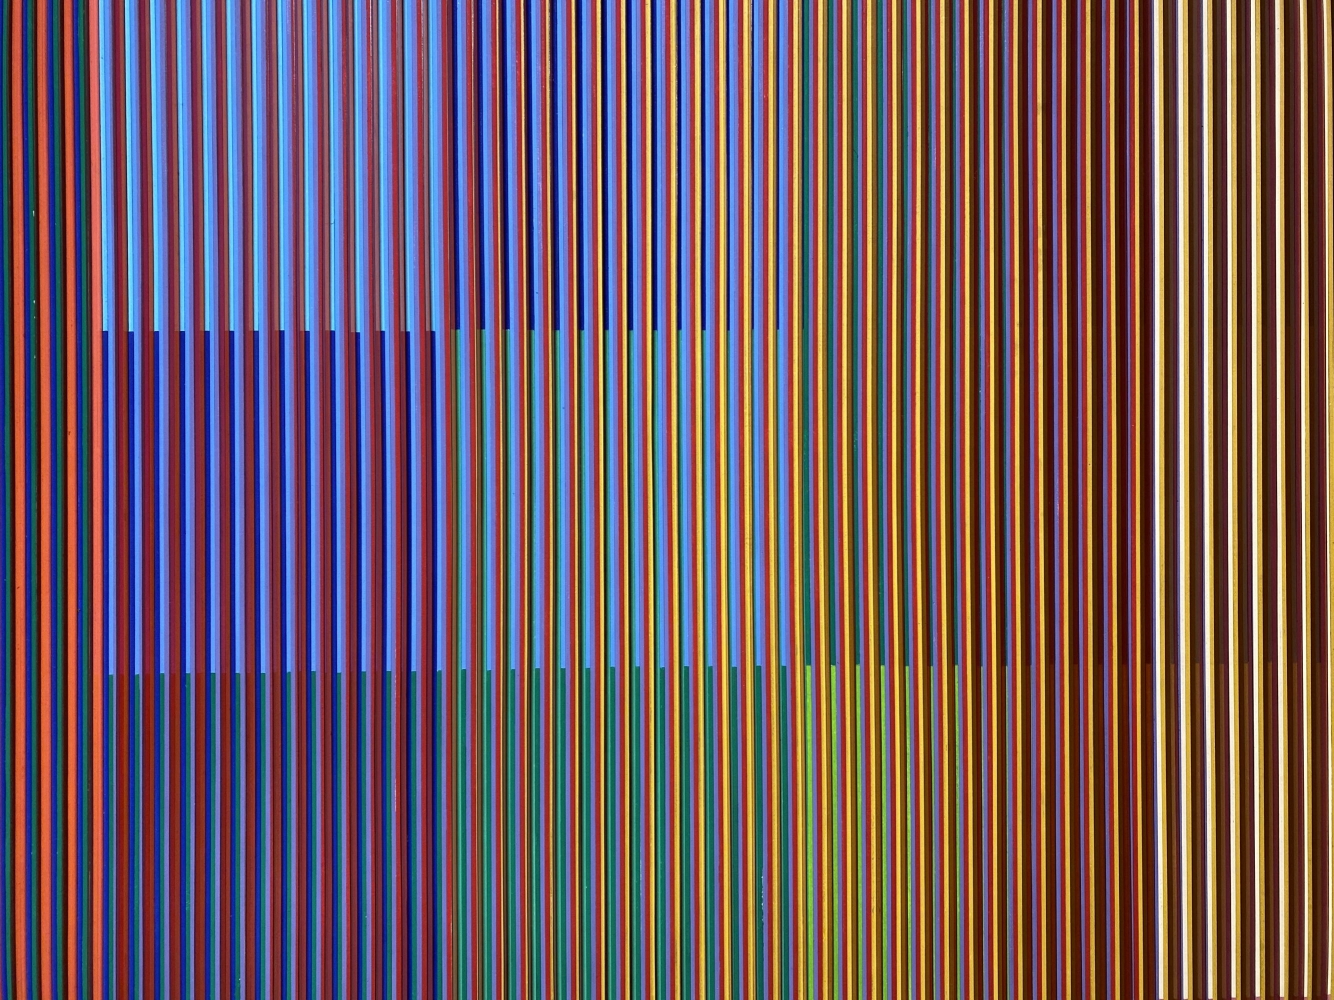 Carlos Cruz-Diez

Detail of&amp;nbsp;Physichromie 678, 1973

Acrylic paint on cardboard, PVC and wood, aluminum frame.
100h x 100w cm
39 47/127h x 39 47/127w in

Unique&amp;nbsp;